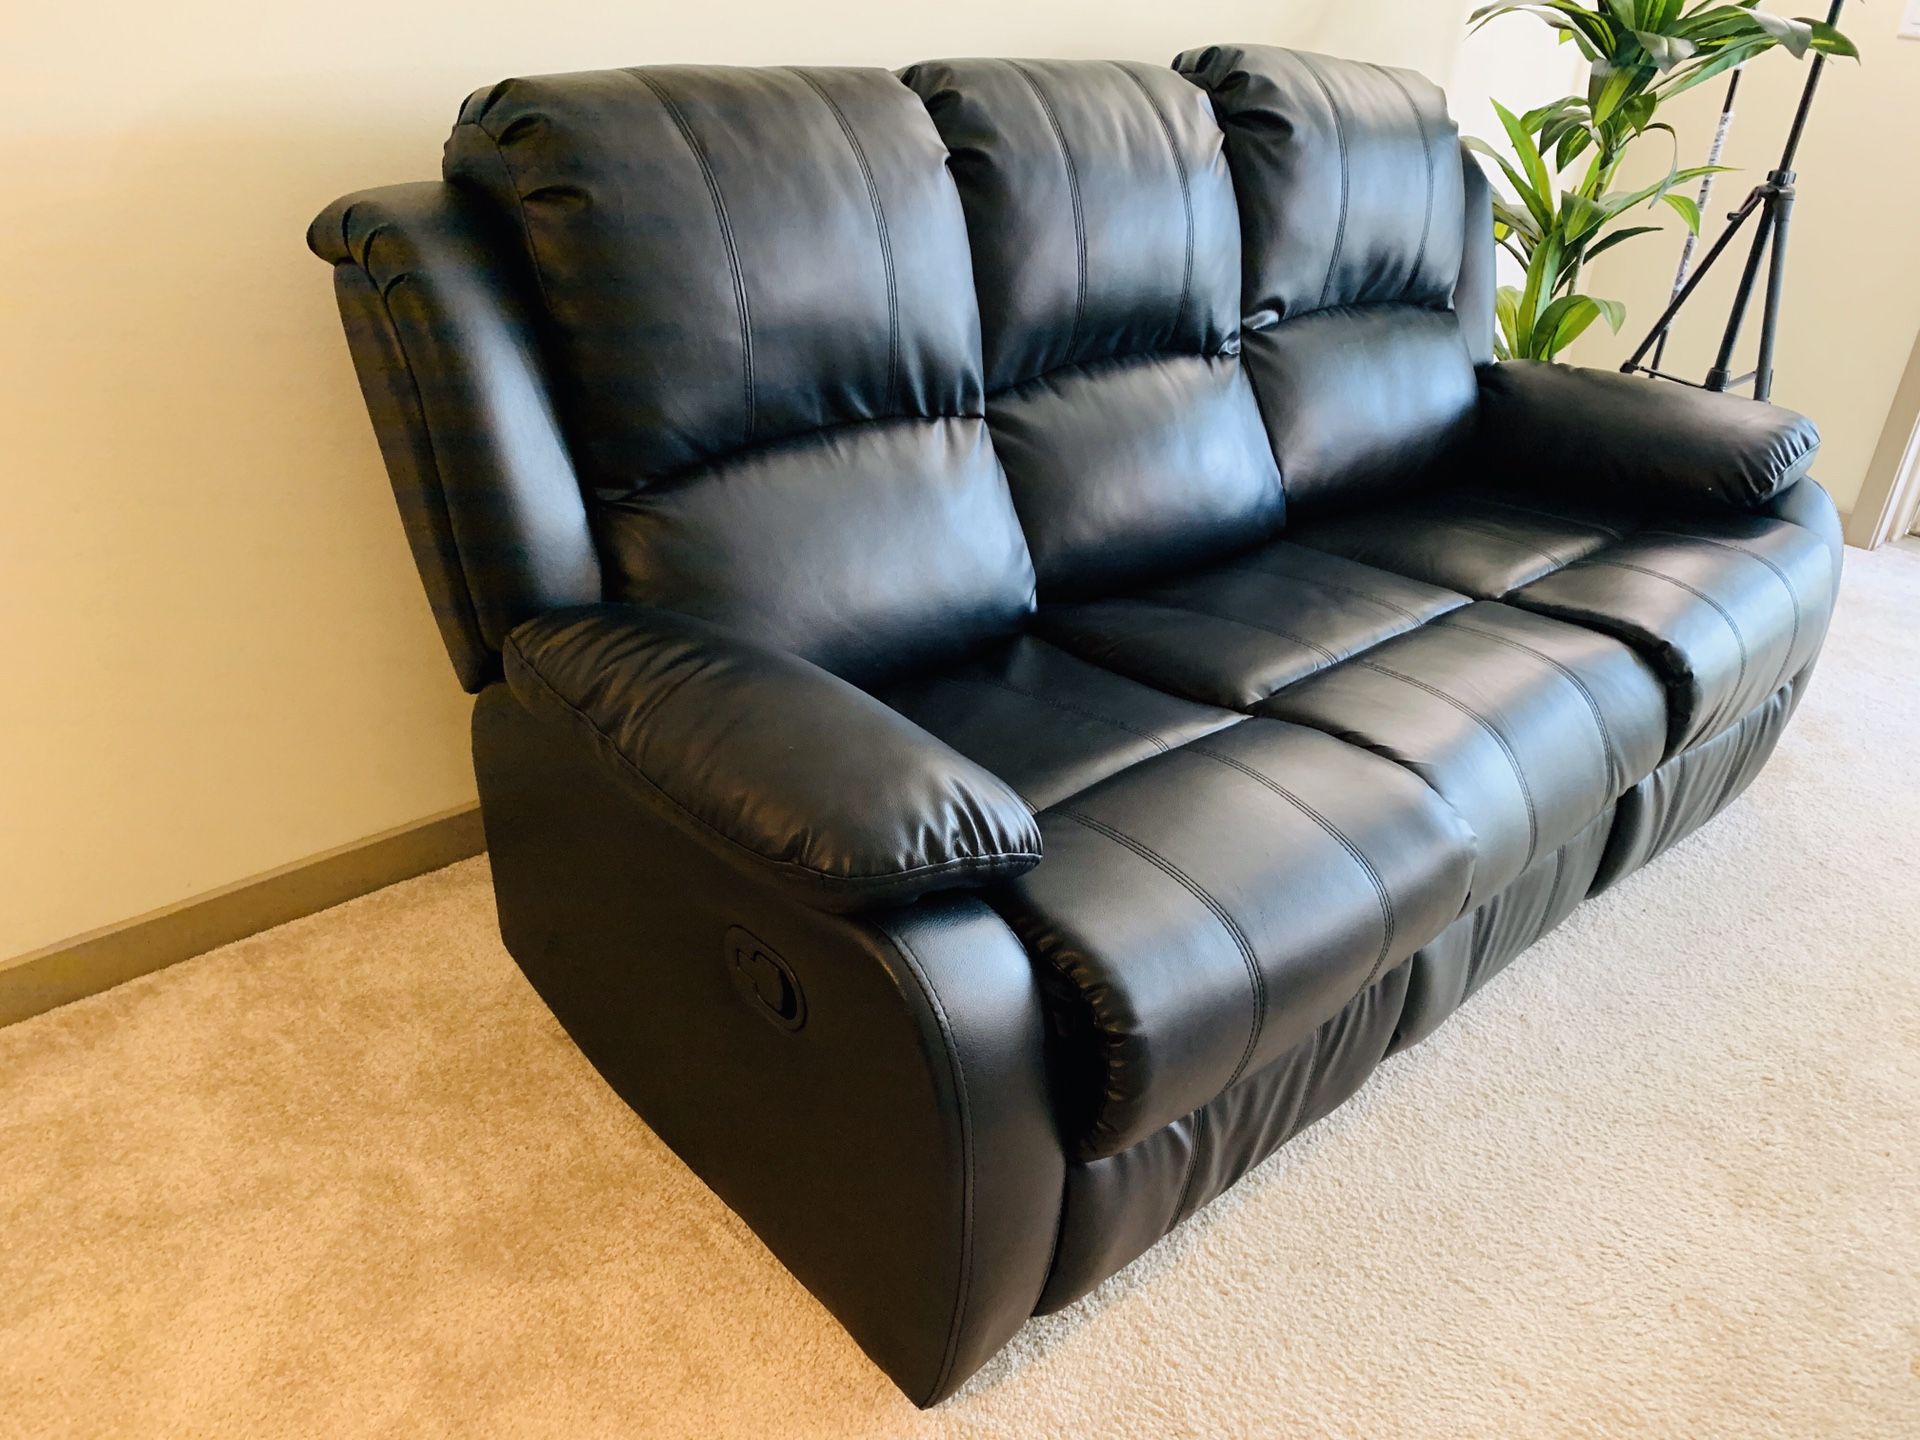 3 Seat Leather Recliner Sofa Black